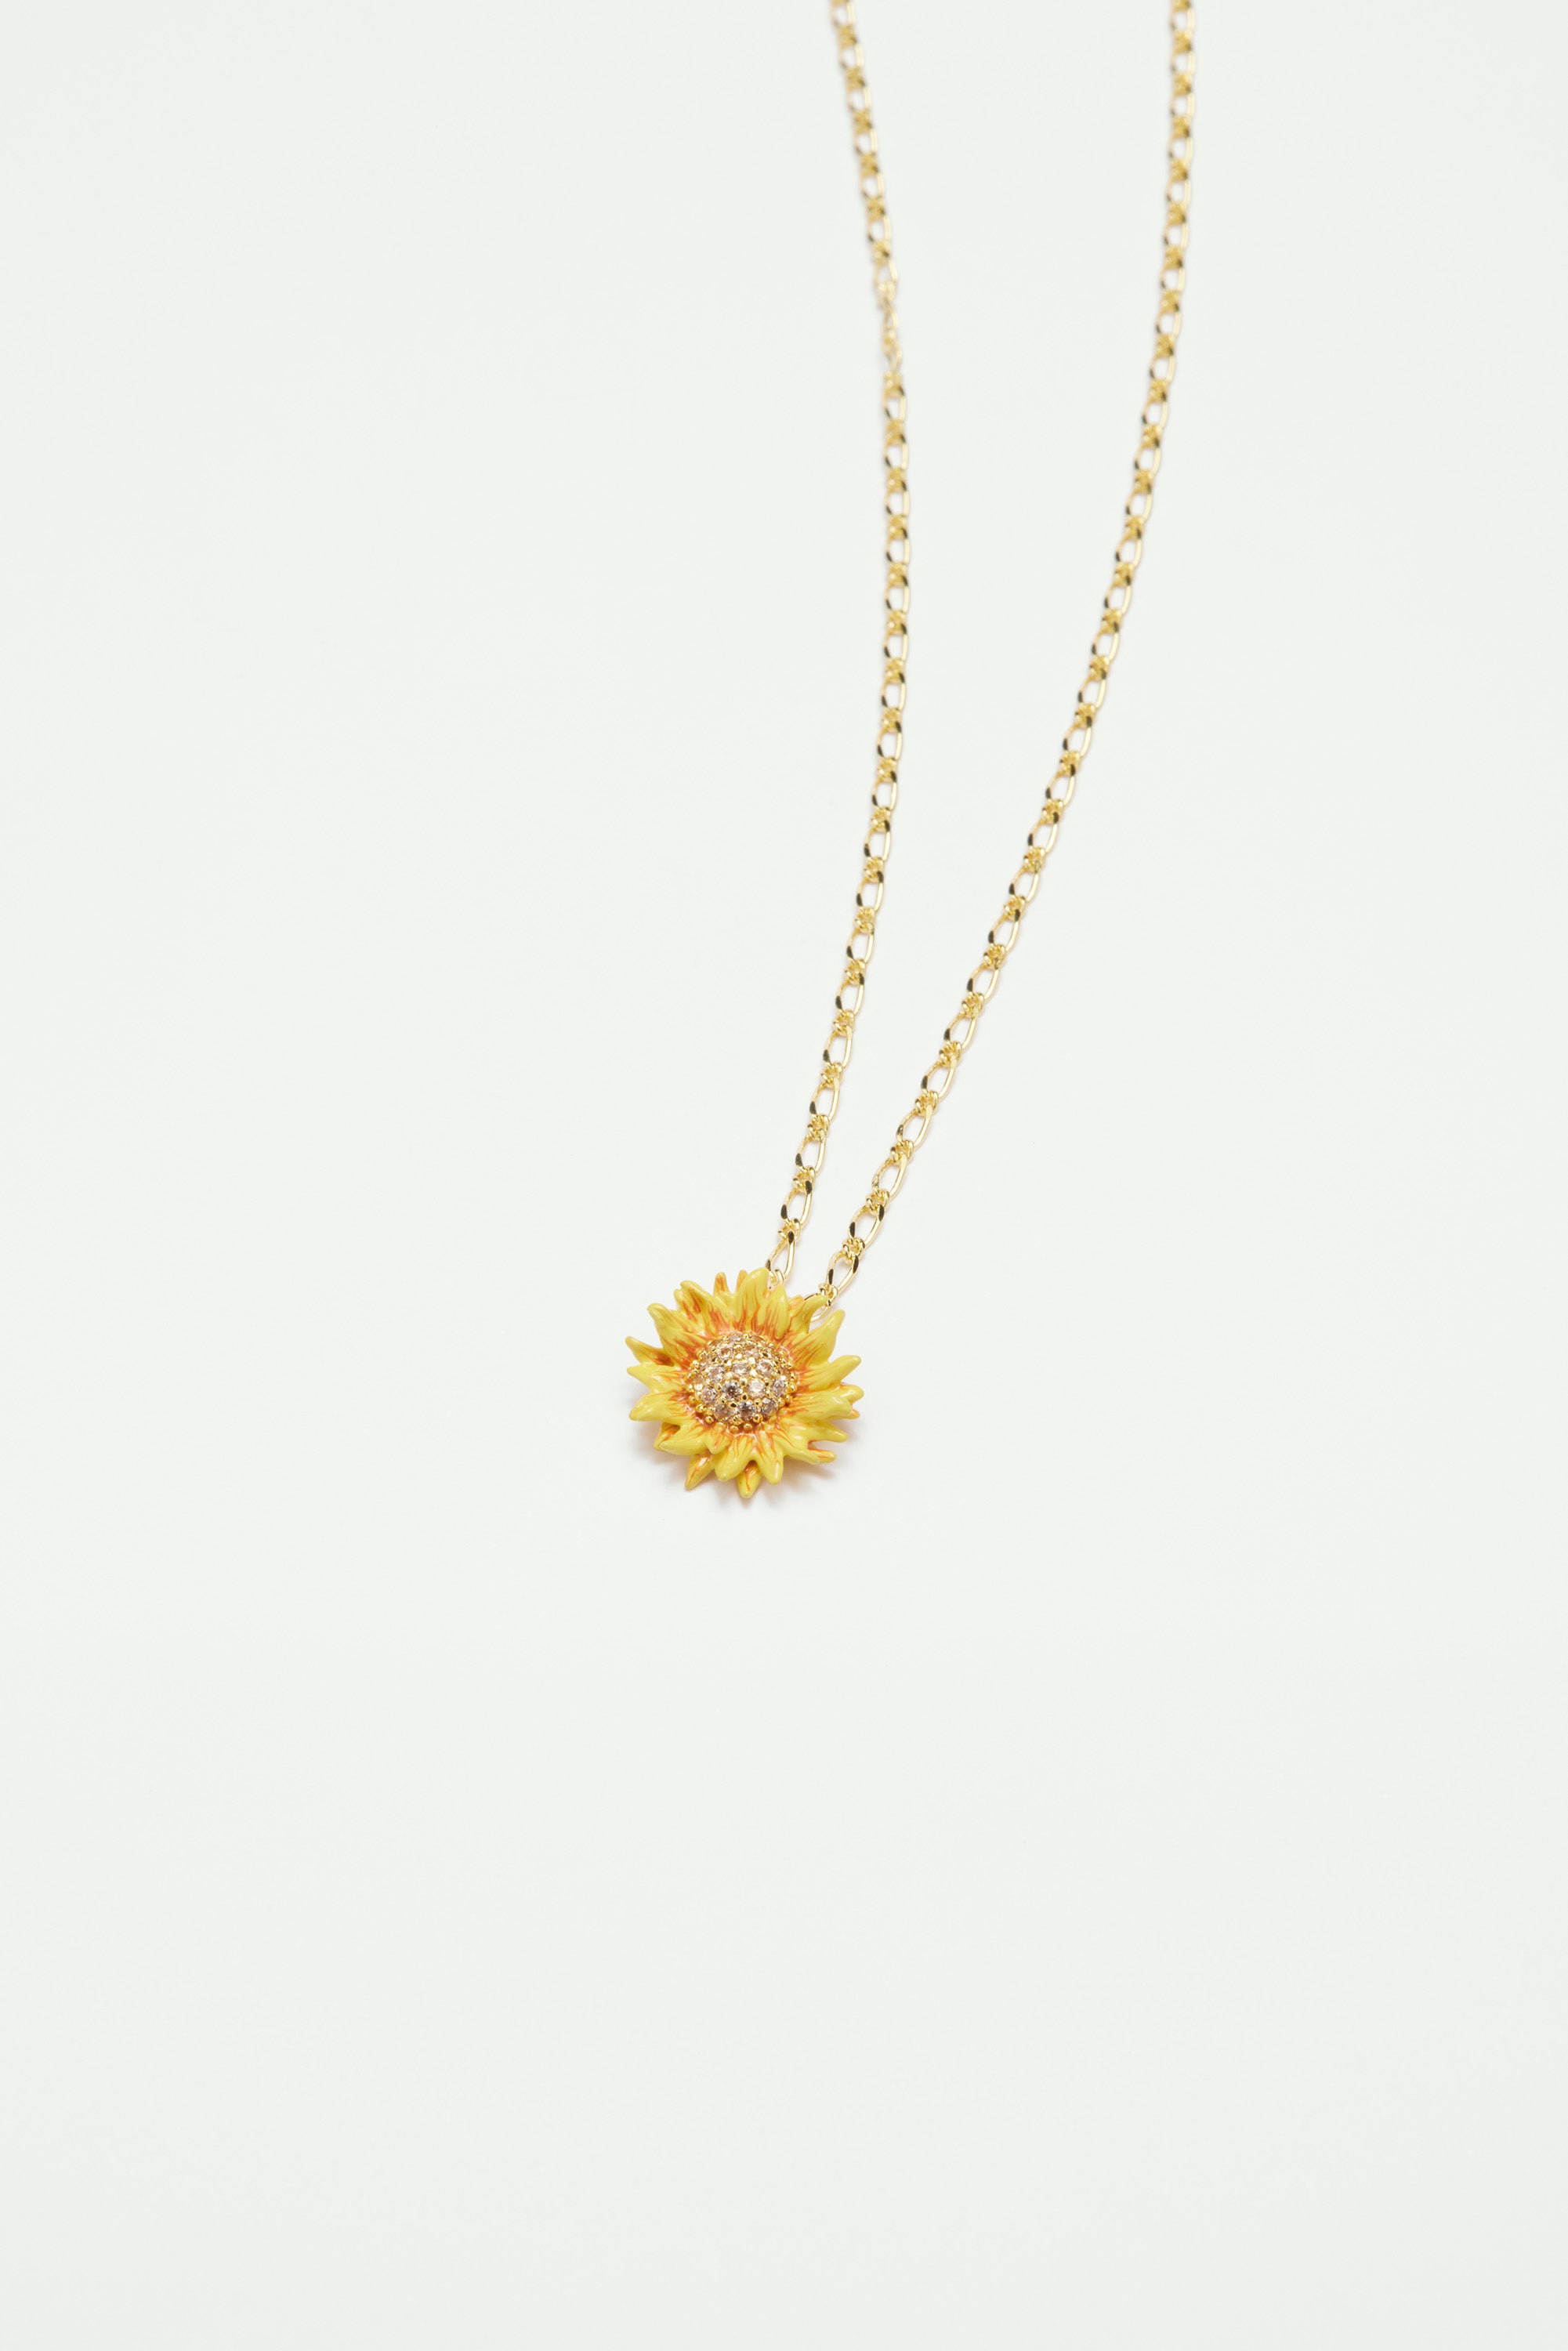 Sunflower pendant necklace